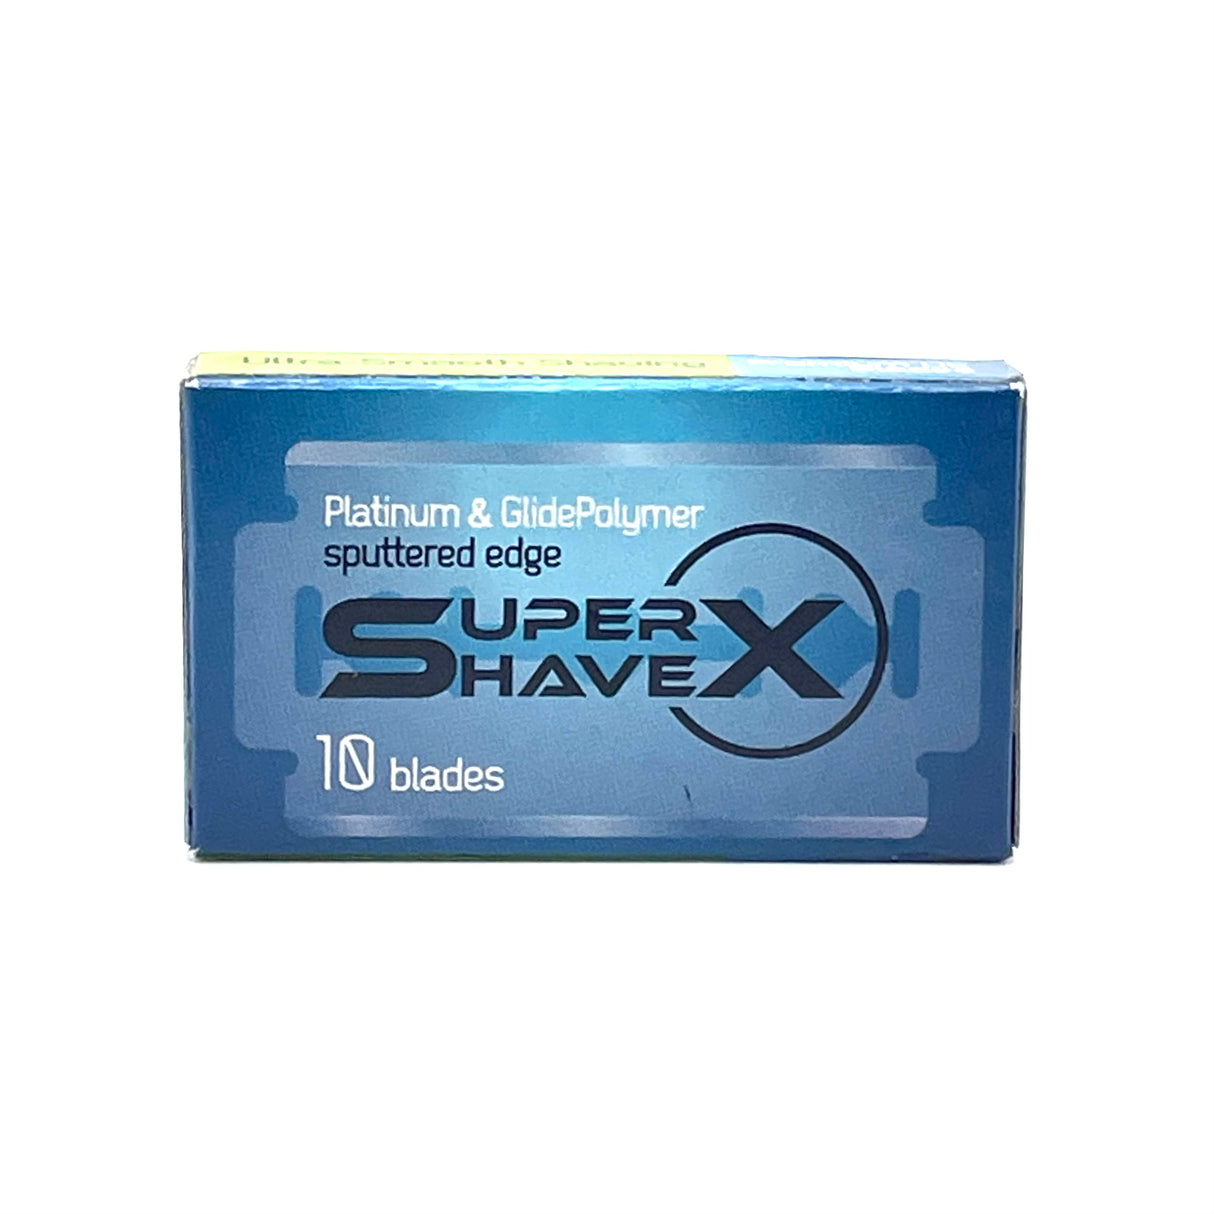 Super Shave X - Platinum Coated Double Edge Razor Blades - Pack of 10 Blades